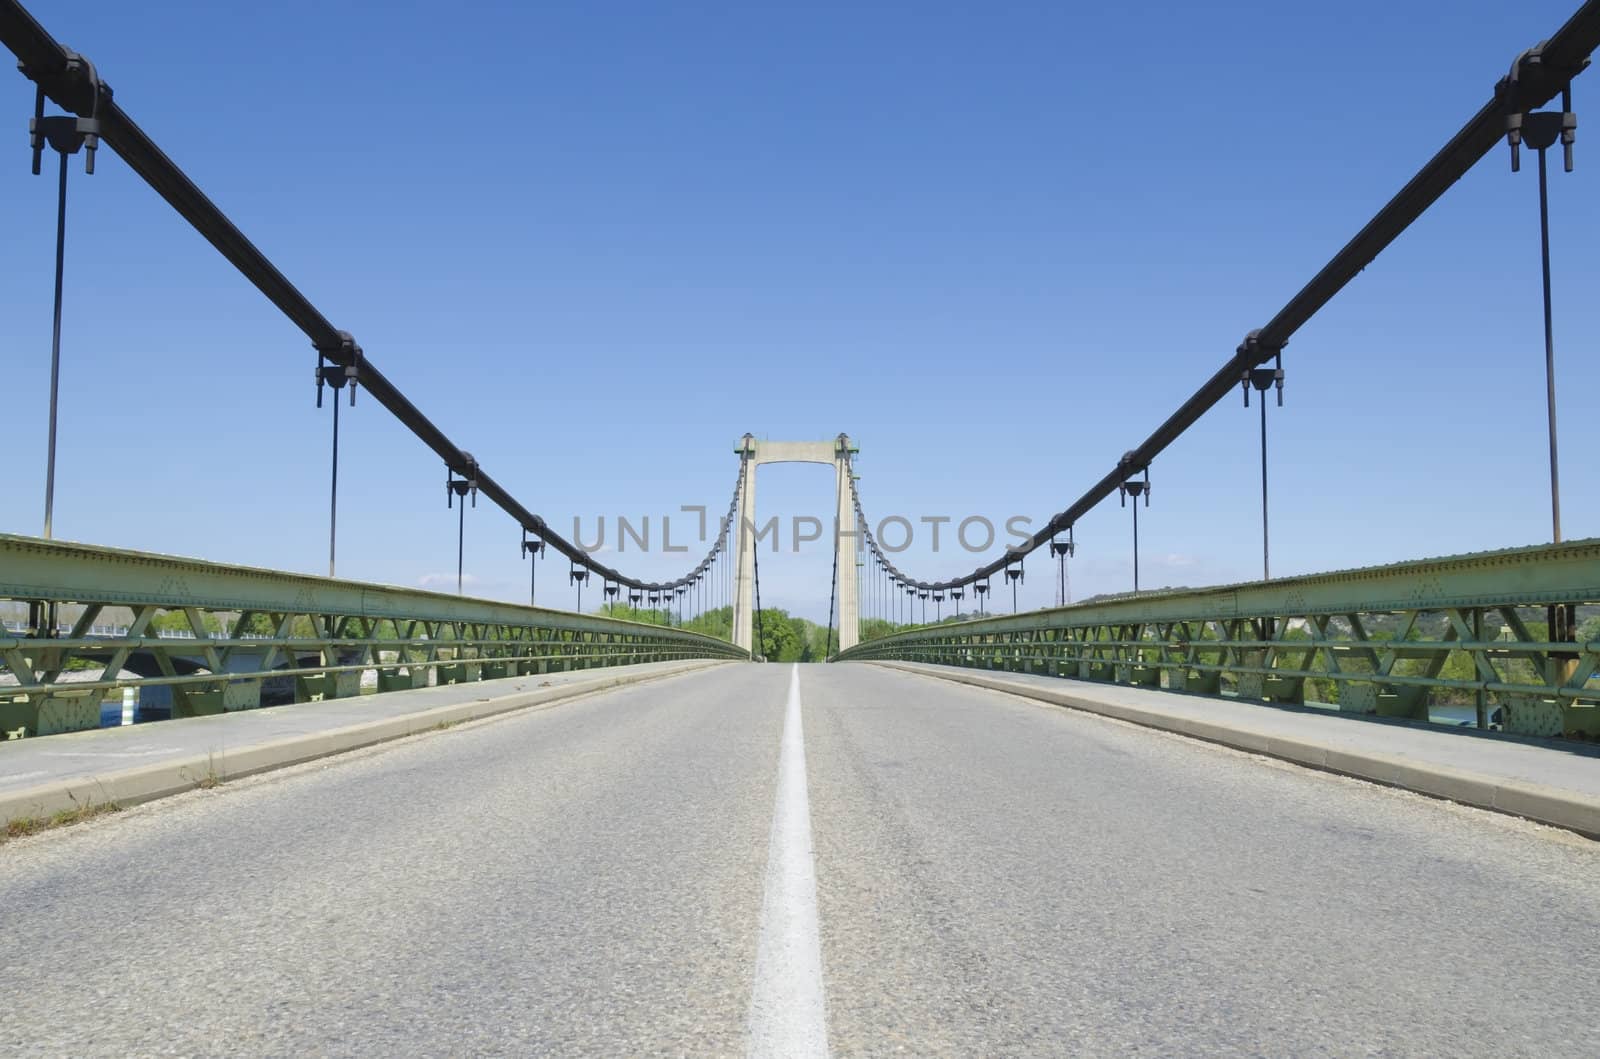 suspension bridge in perspective, large view